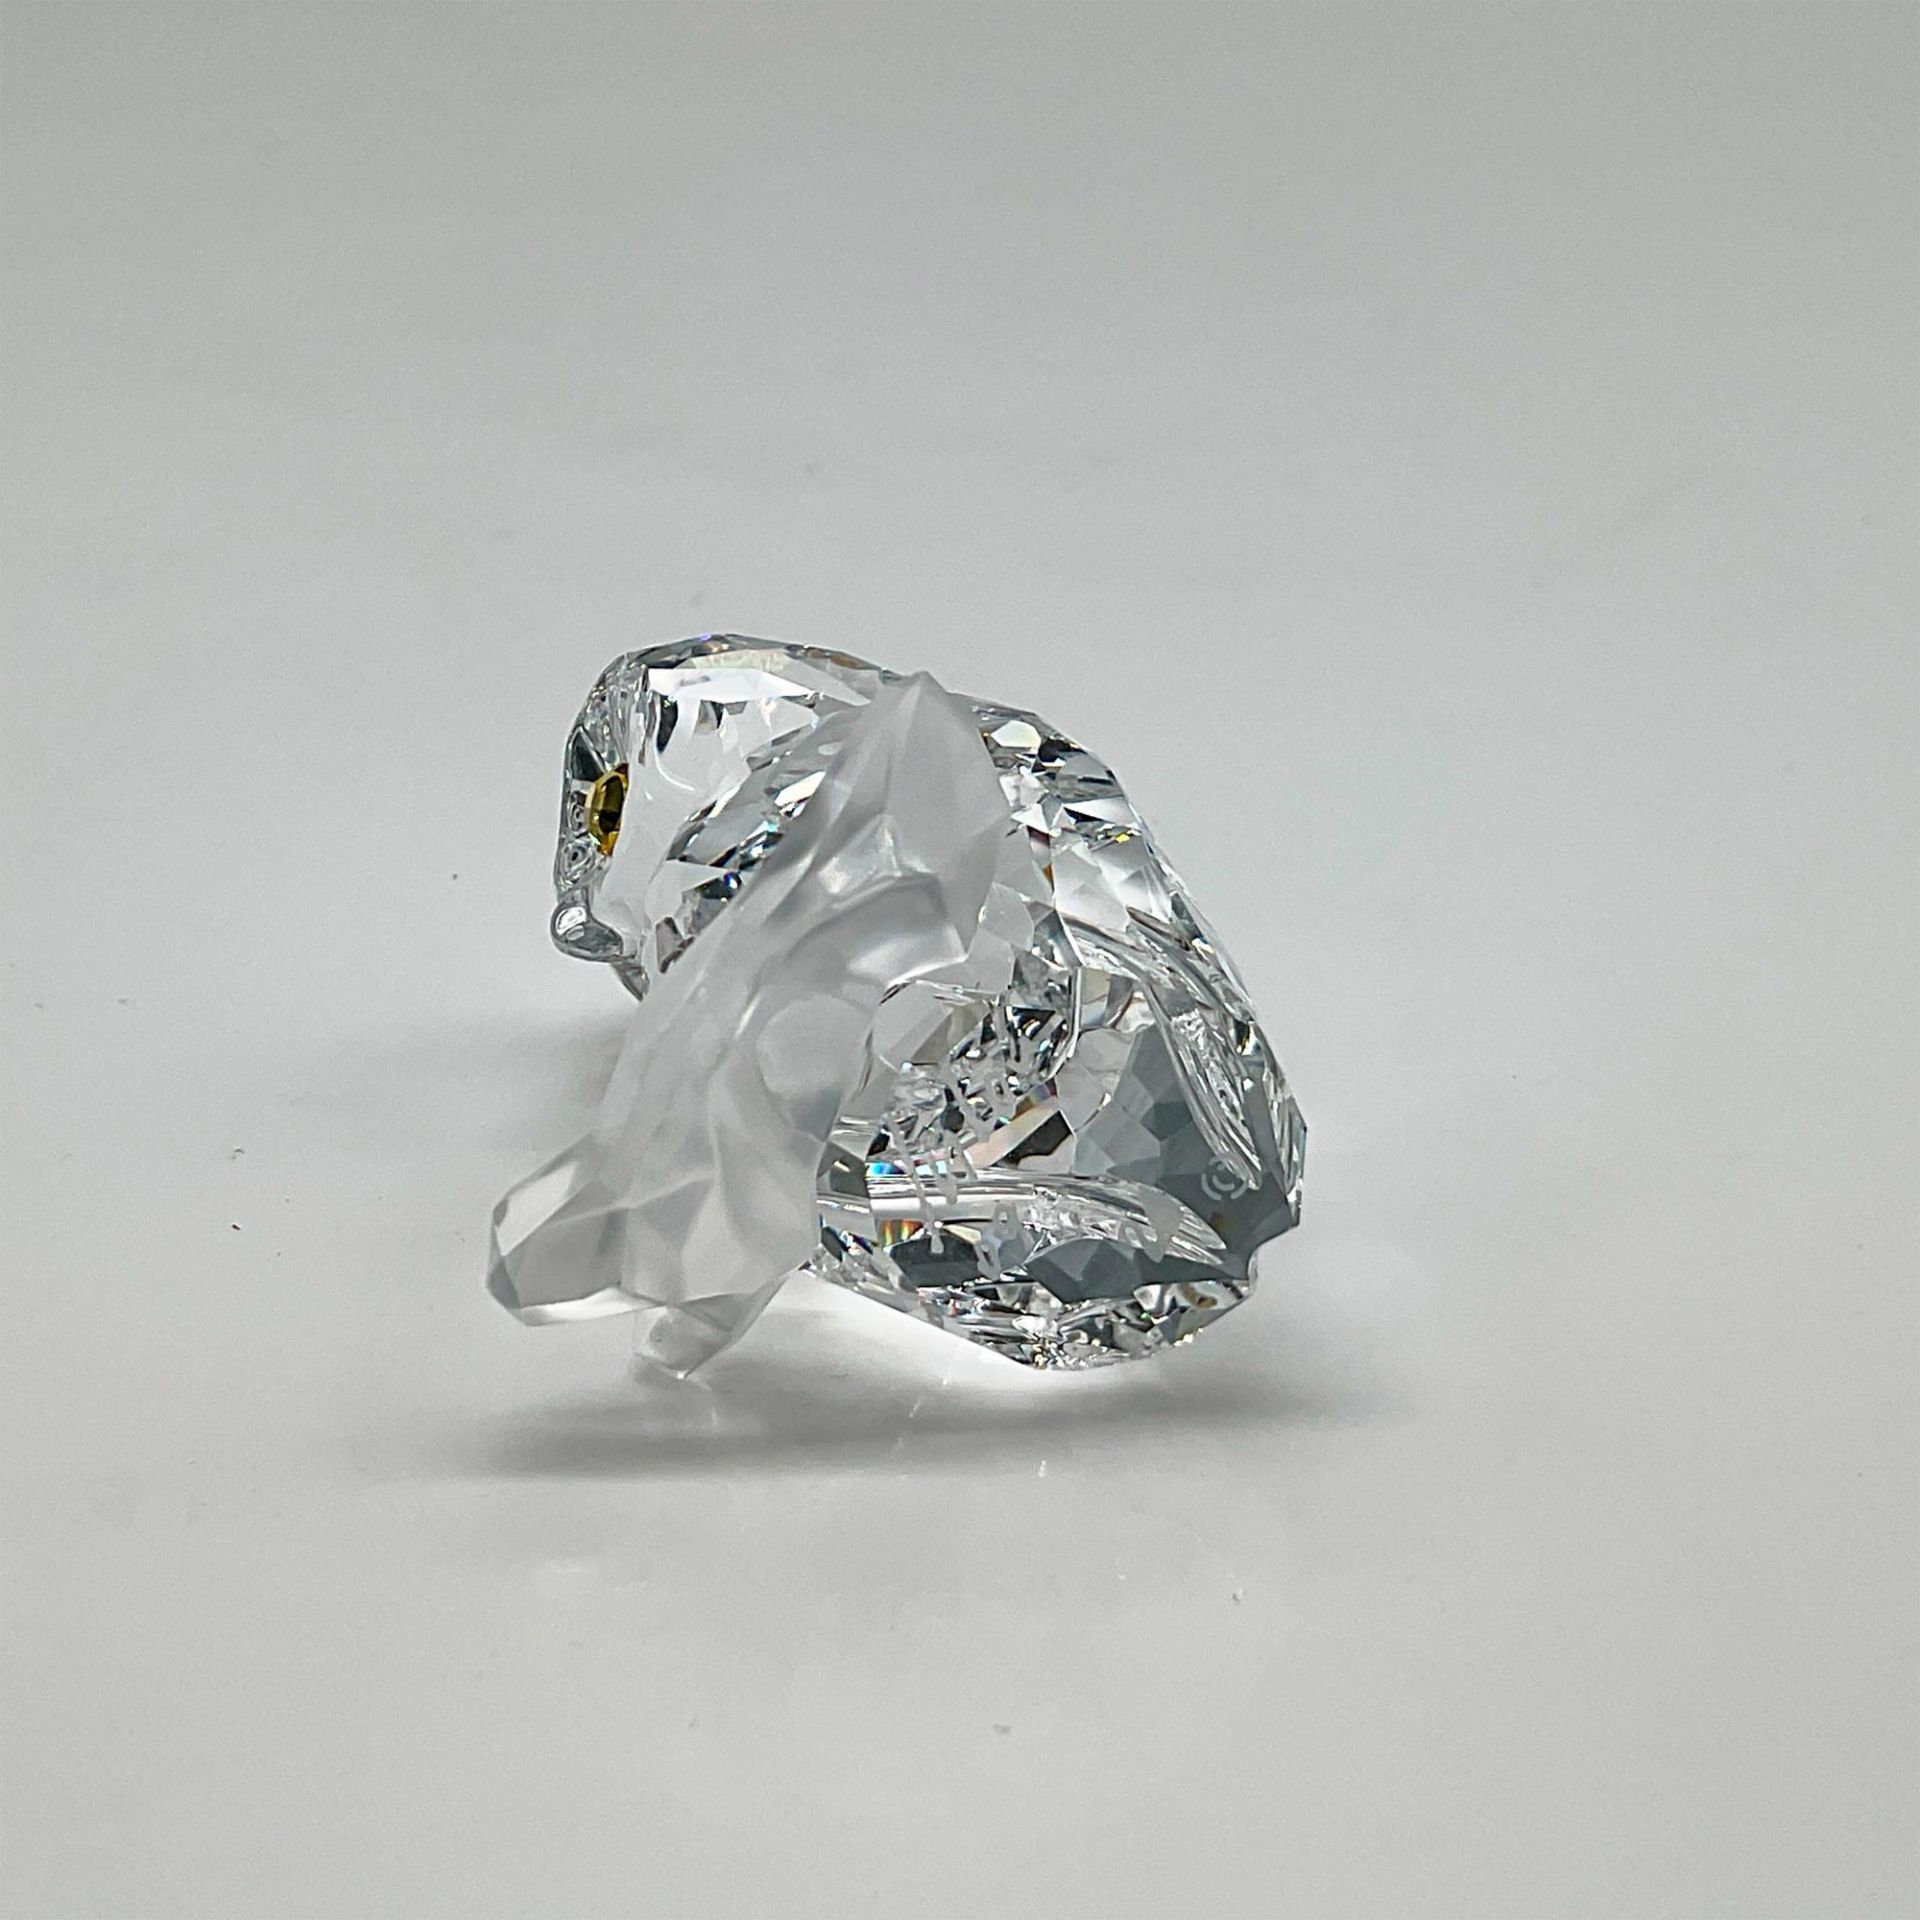 Swarovski Crystal Figurine, Small Owl - Image 3 of 4